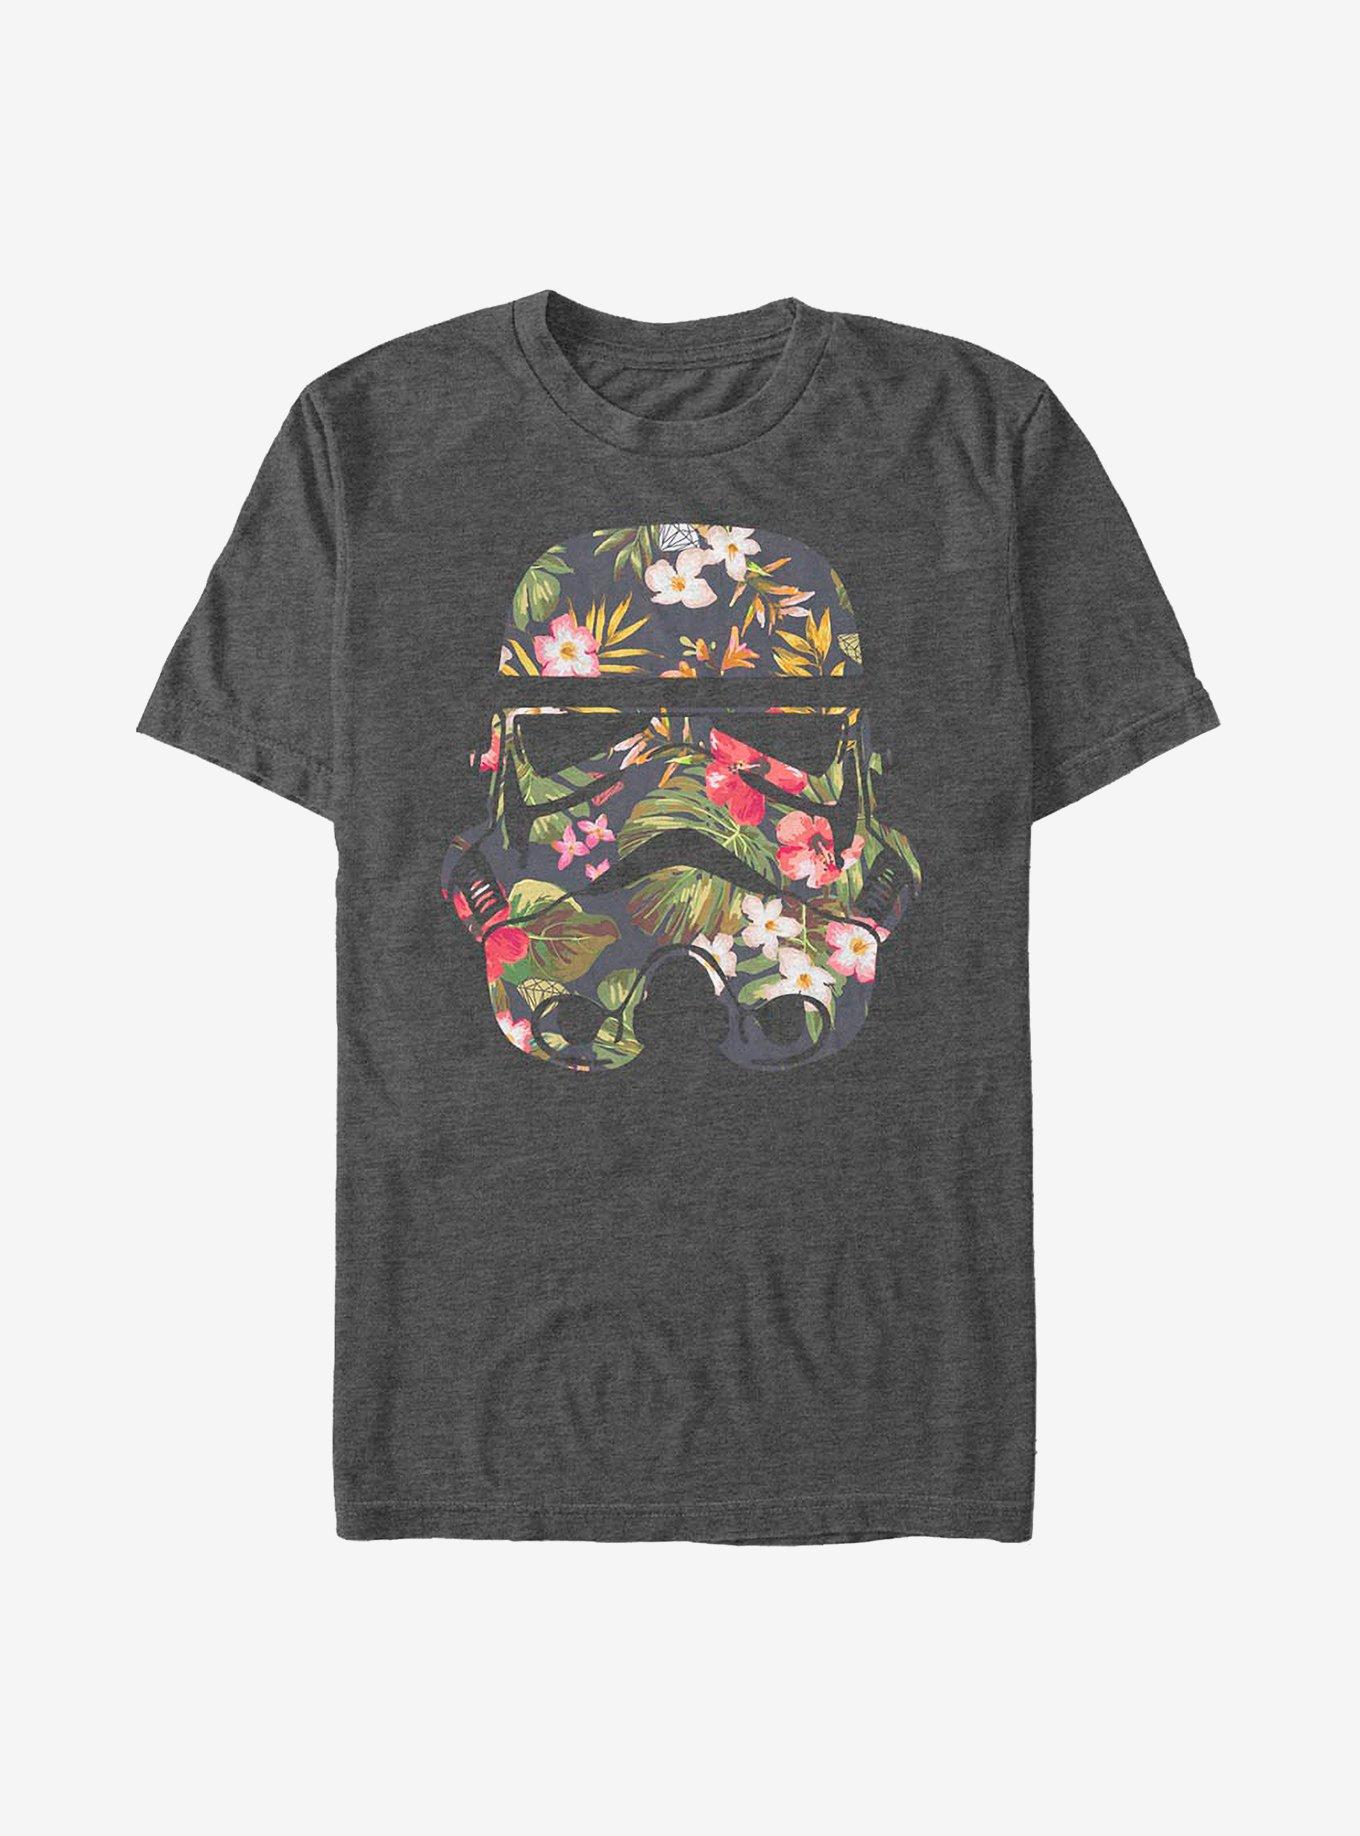 Star Wars Storm Flowers T-Shirt, CHAR HTR, hi-res